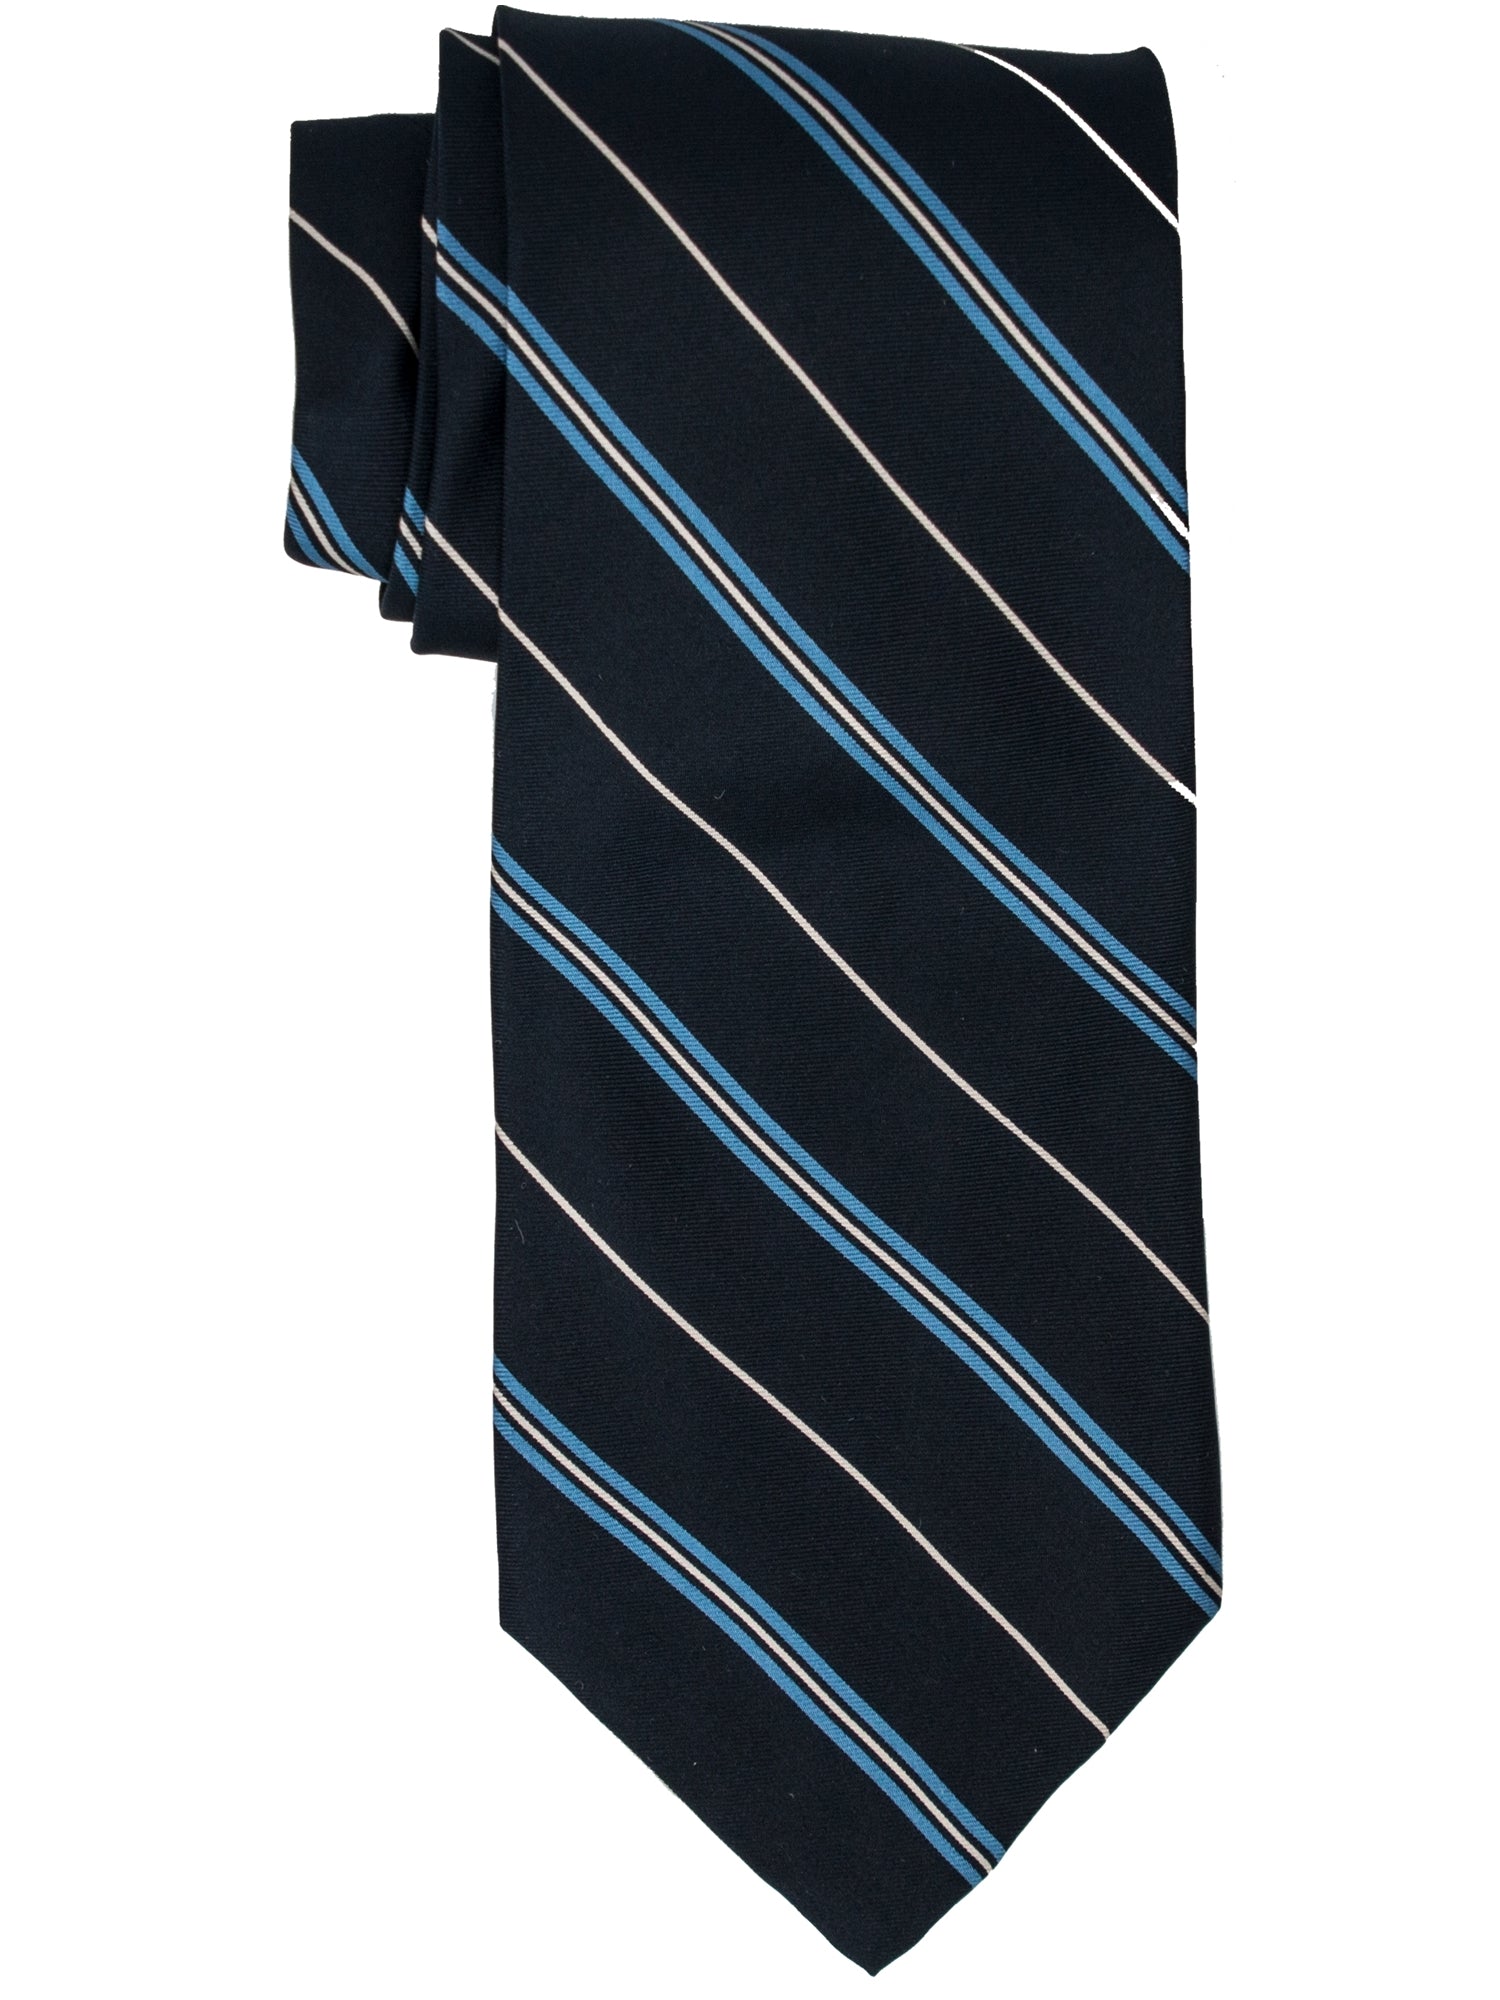 Men's Silk Woven Wedding Neck Tie Collection Neck Tie TheDapperTie Navy And White Stripes Regular 